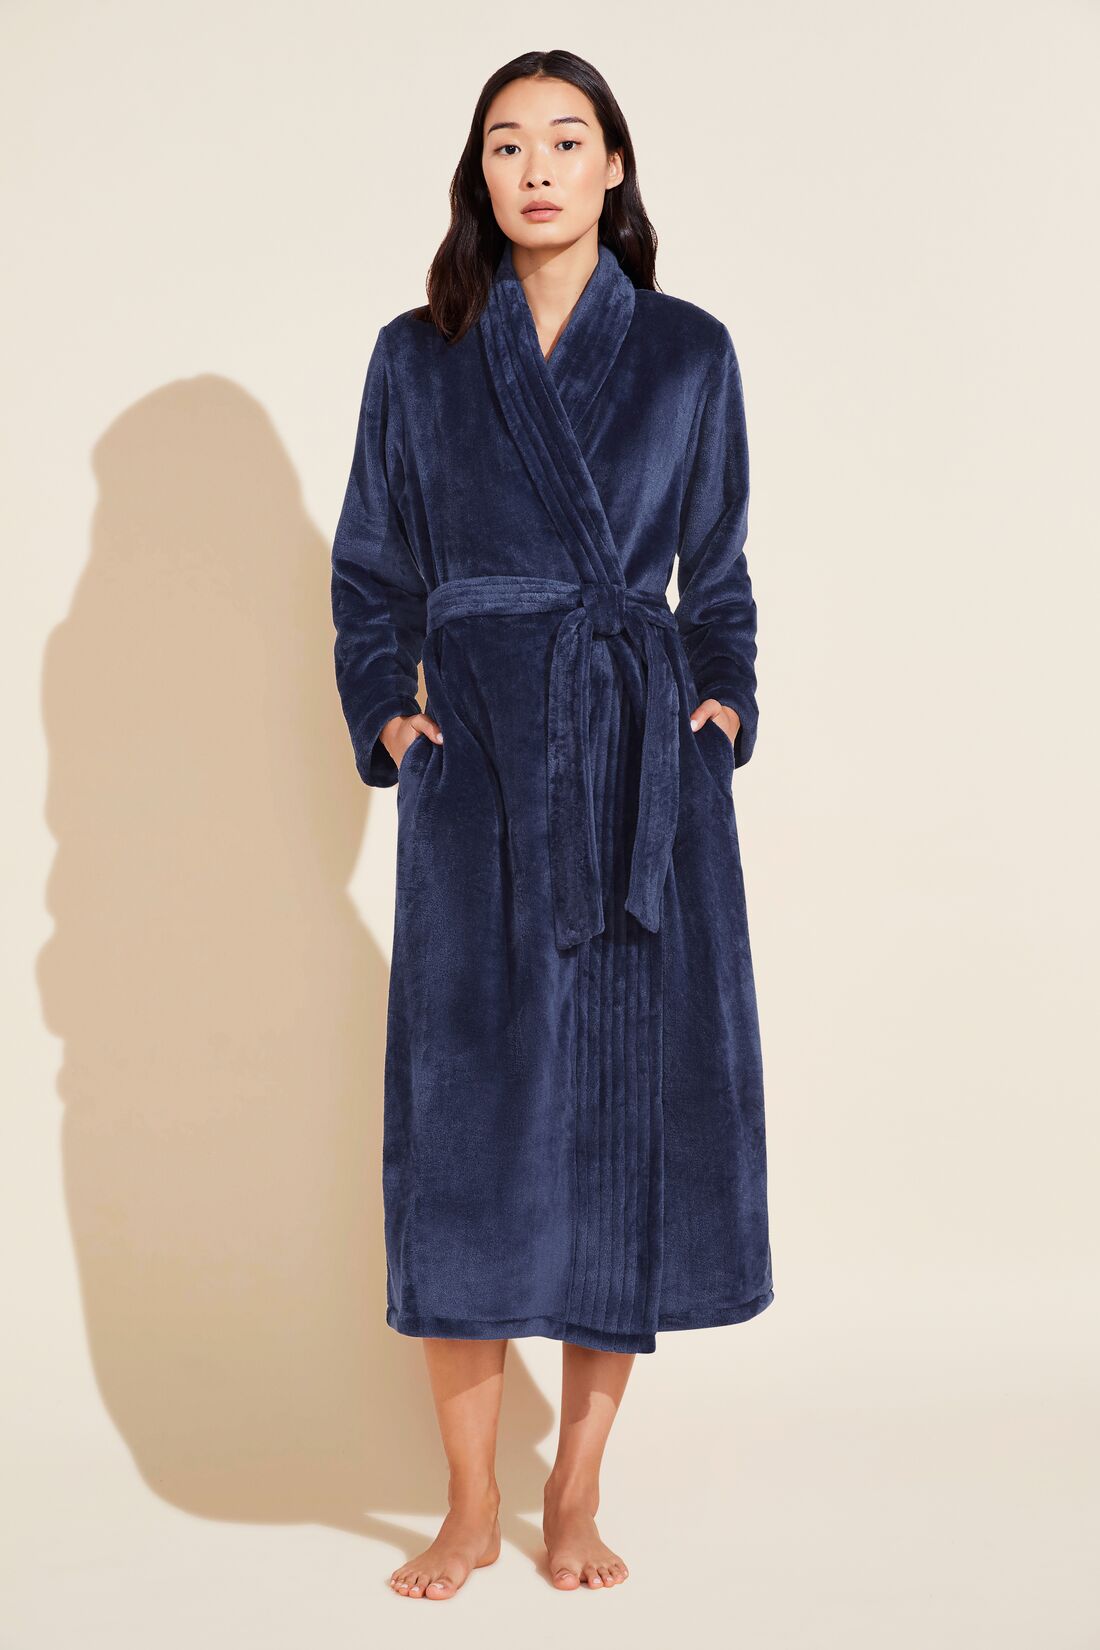 Bilu Nightgowns For Women, Women Long Sleeve Hooded Jumpsuit Pajamas Casual  Winter Warm Rompe Sleepwear Womens Pajamas Sky Blue 